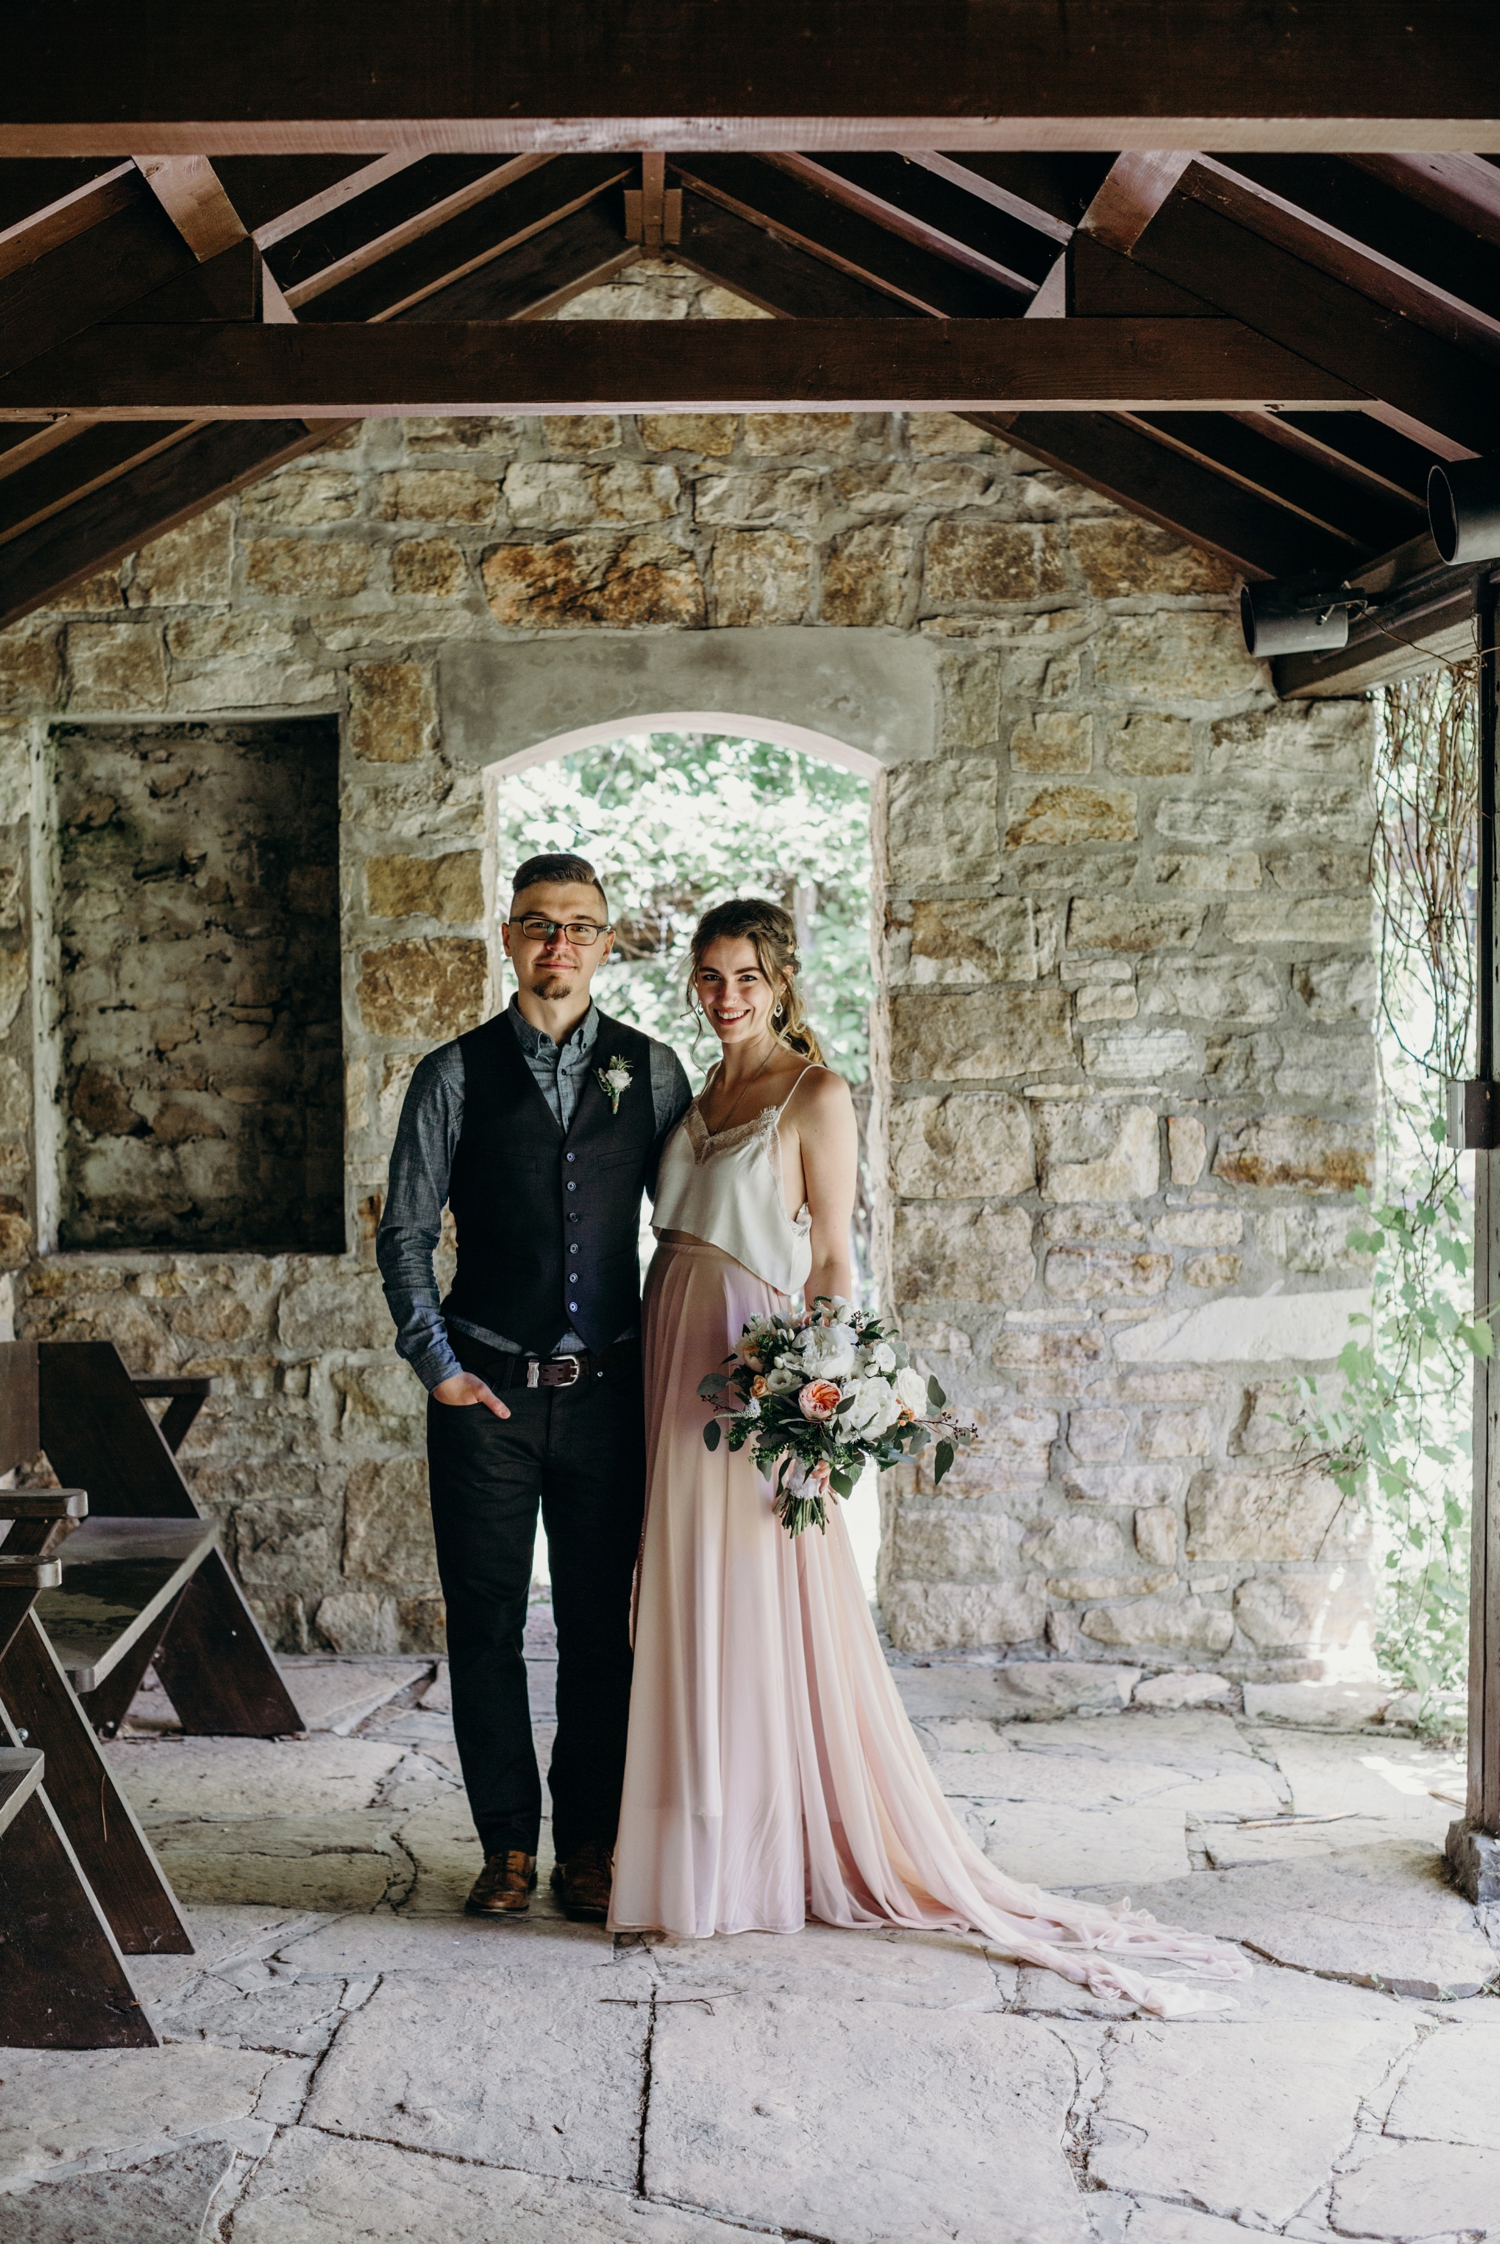 Ottawa Intimate Wedding Photographer - Kasandra Arthur 3.jpg